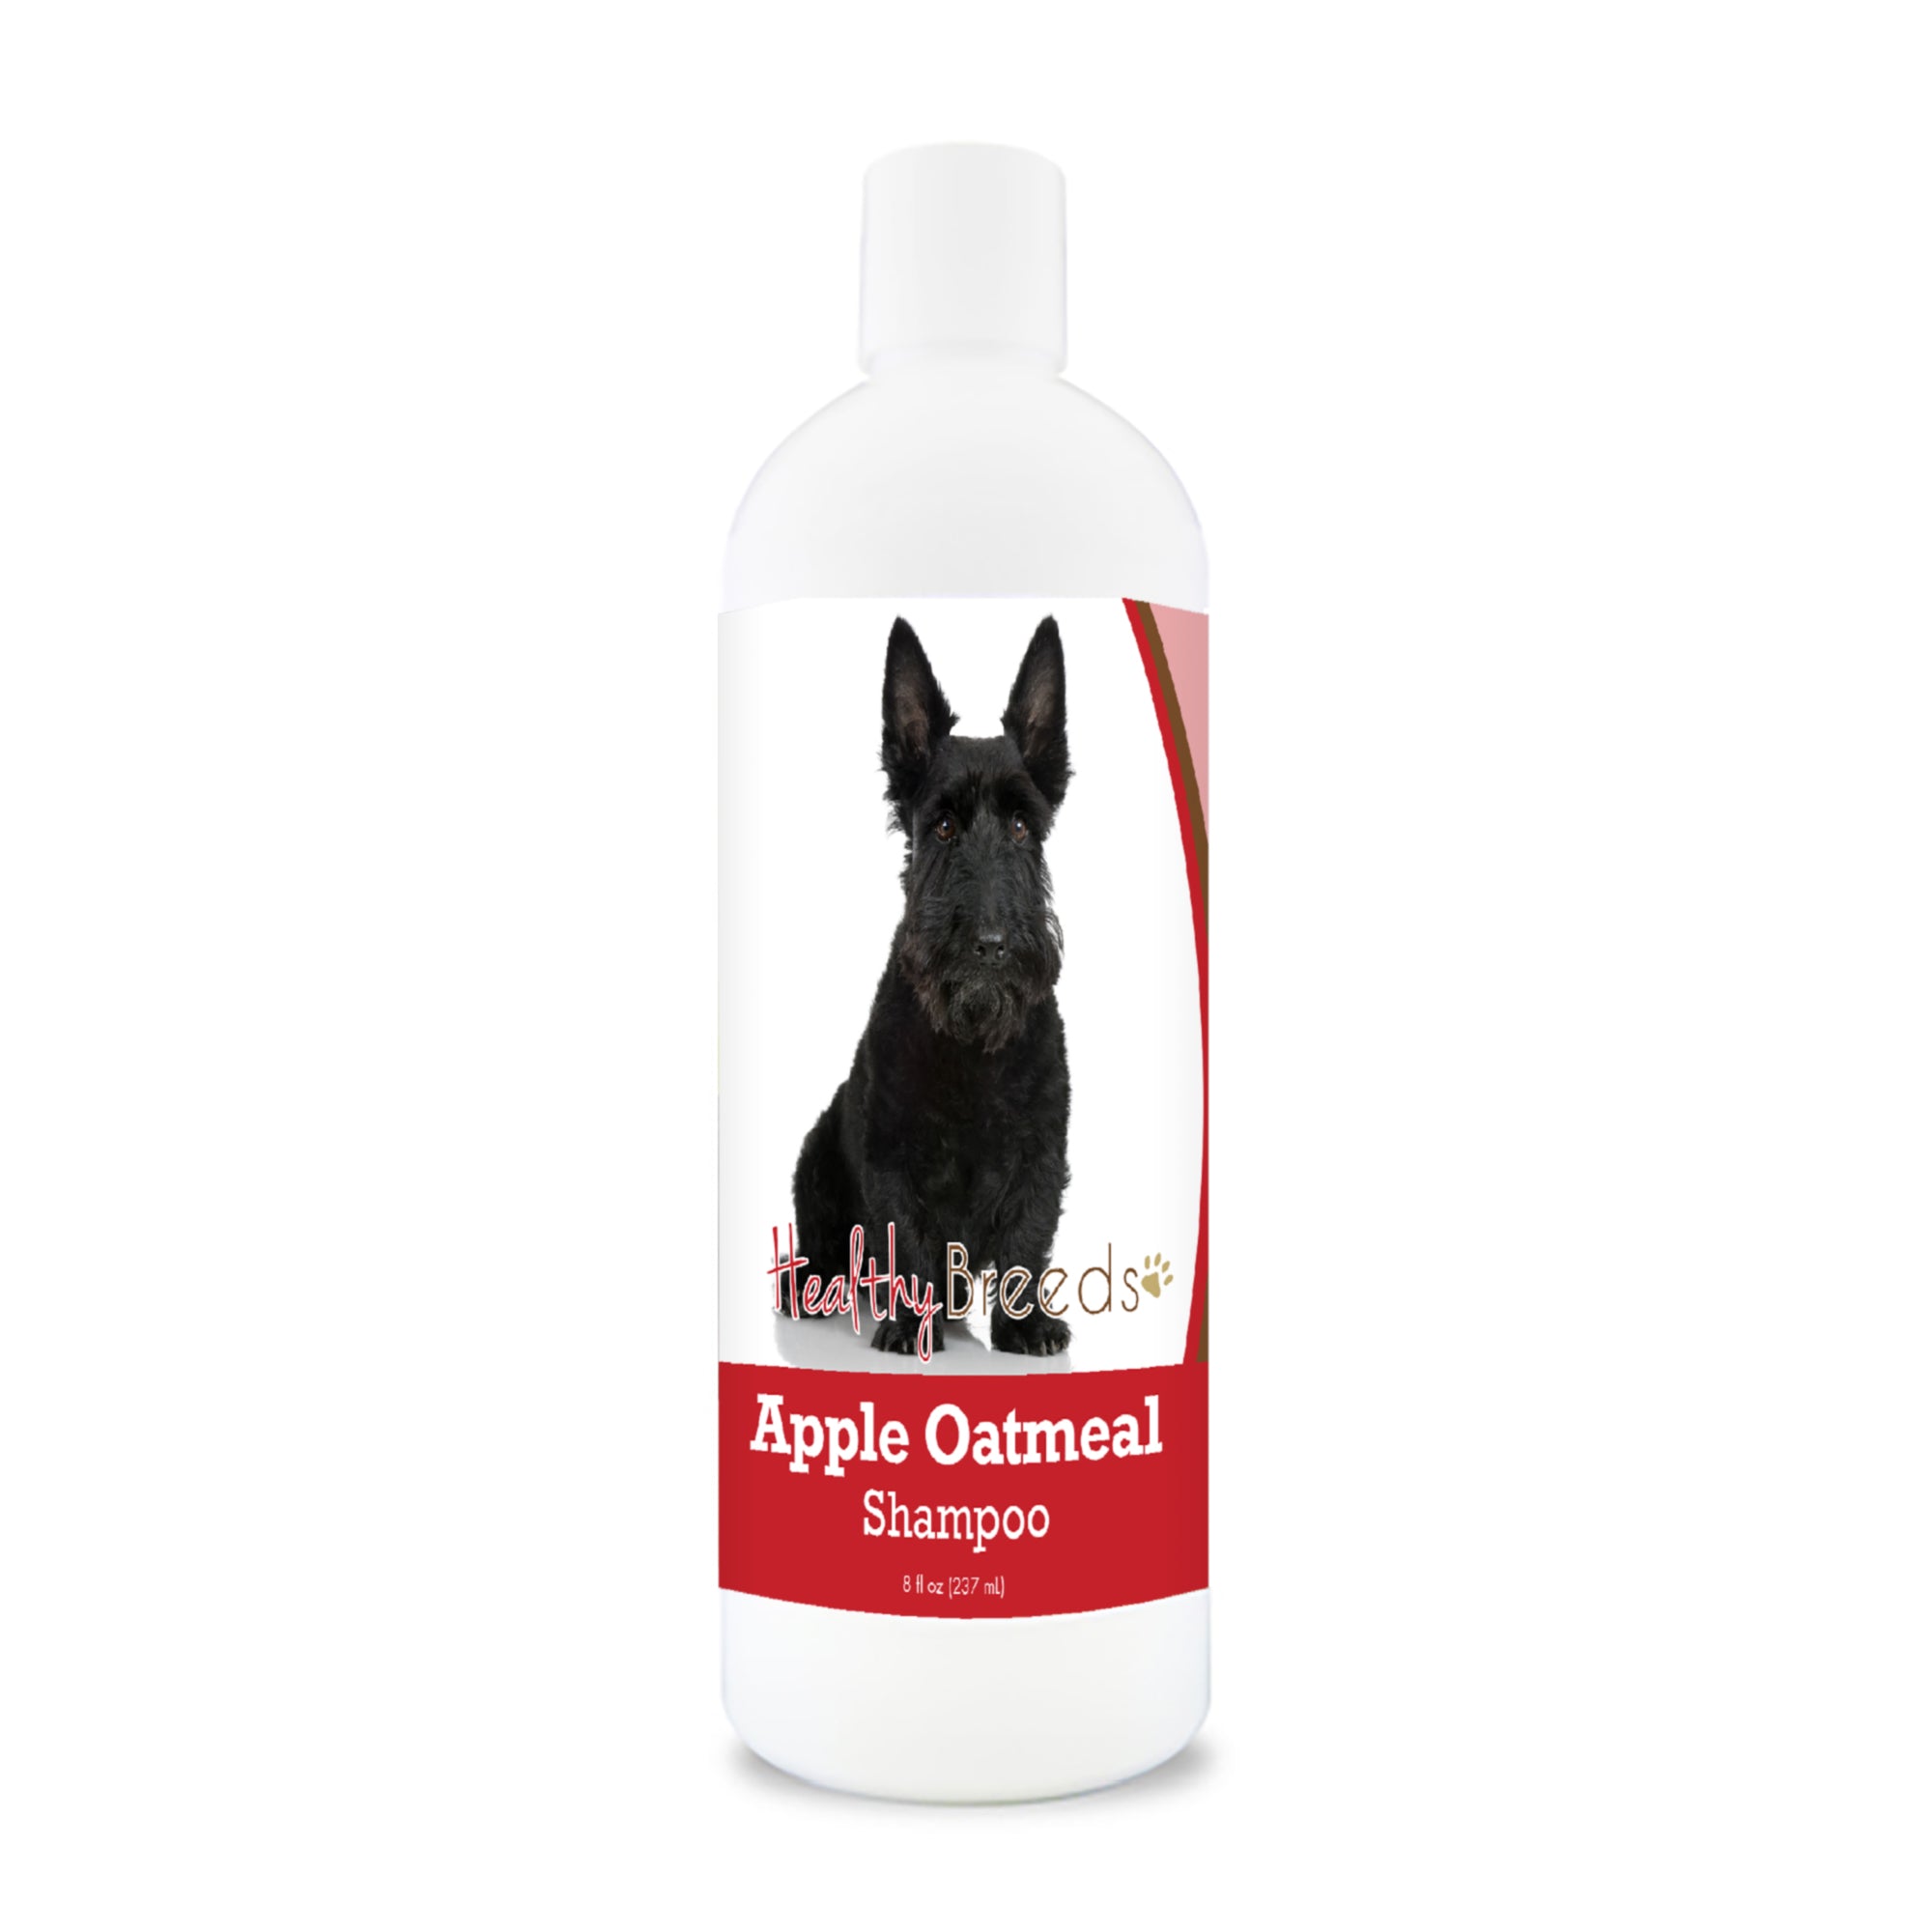 Scottish Terrier Apple Oatmeal Shampoo 8 oz